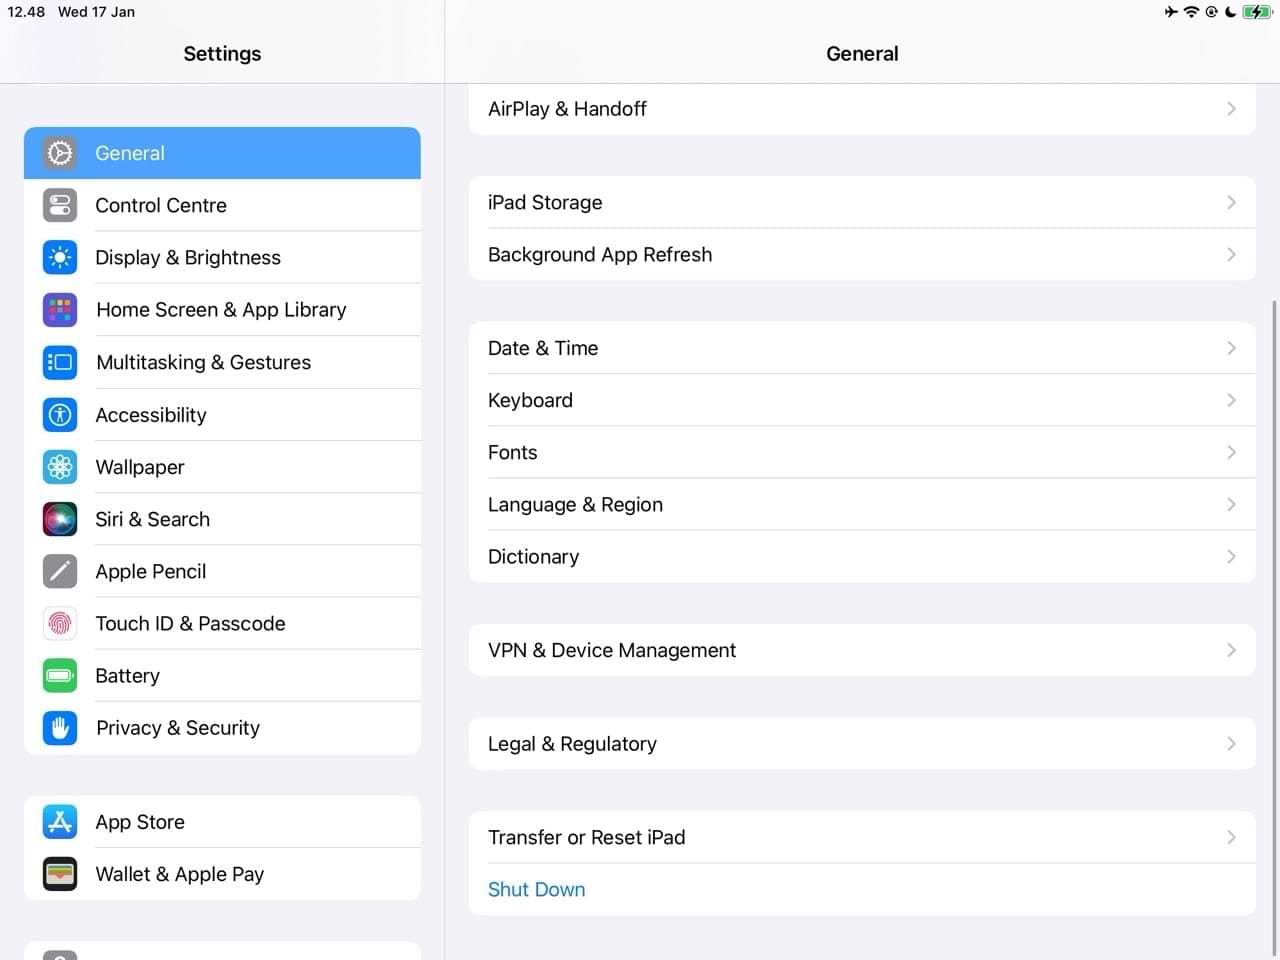 Transfer or Reset iPad in the Settings app